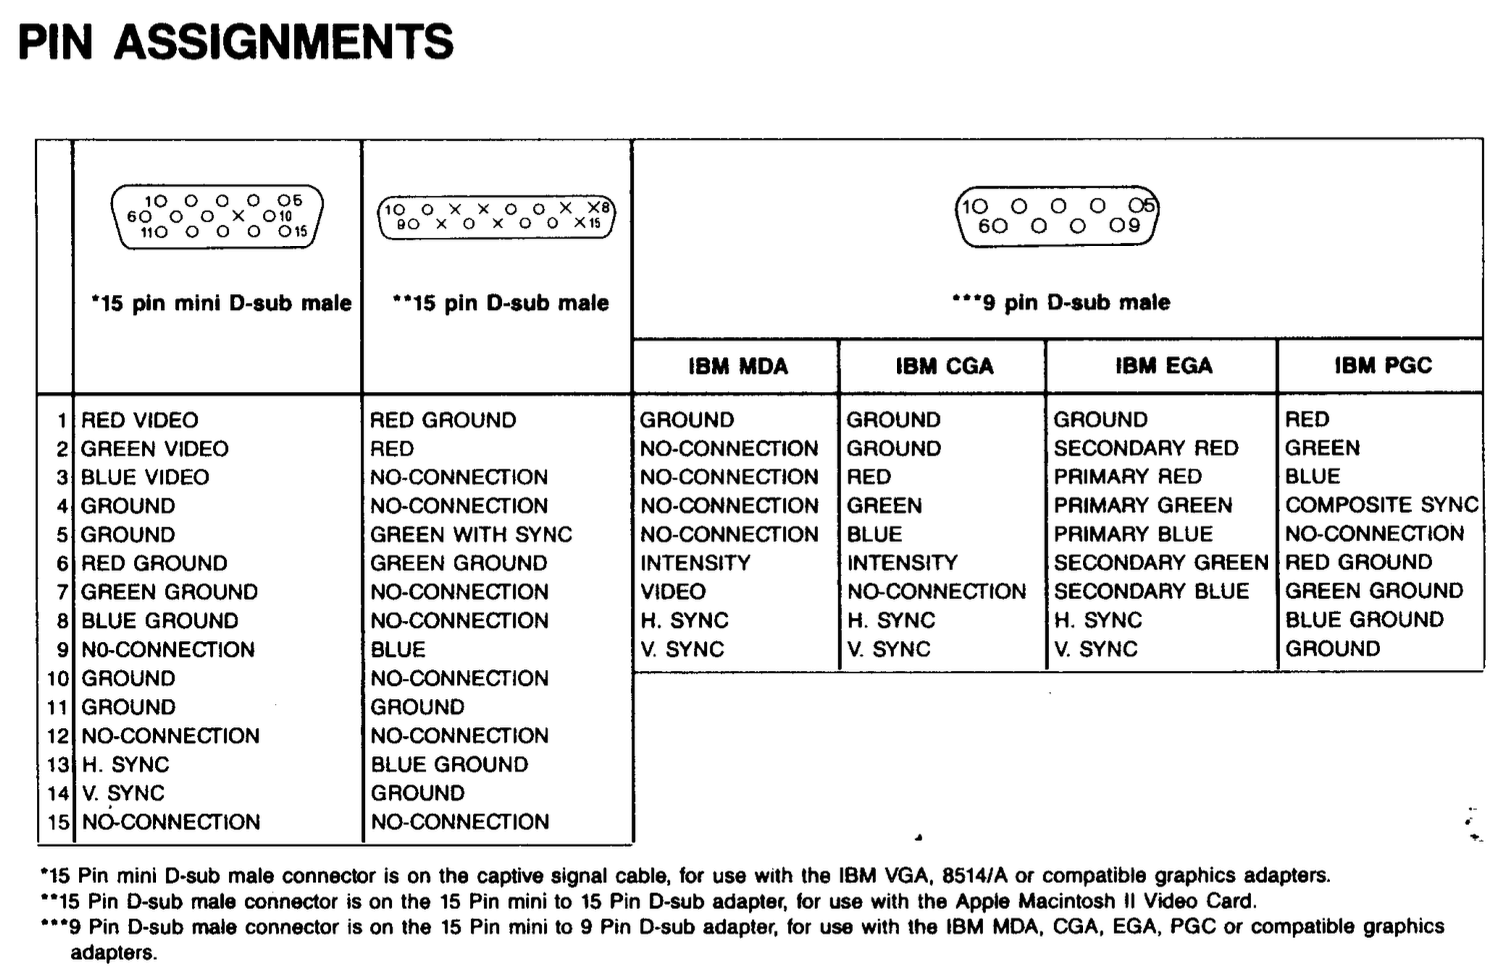 The pinouts, from the service manual: a 15-pin mini D-sub male (monitor,) a 15-pin D-sub male (Mac RGB,) 9-pin D-sub male (MDA, CGA, EGA, PGC.)